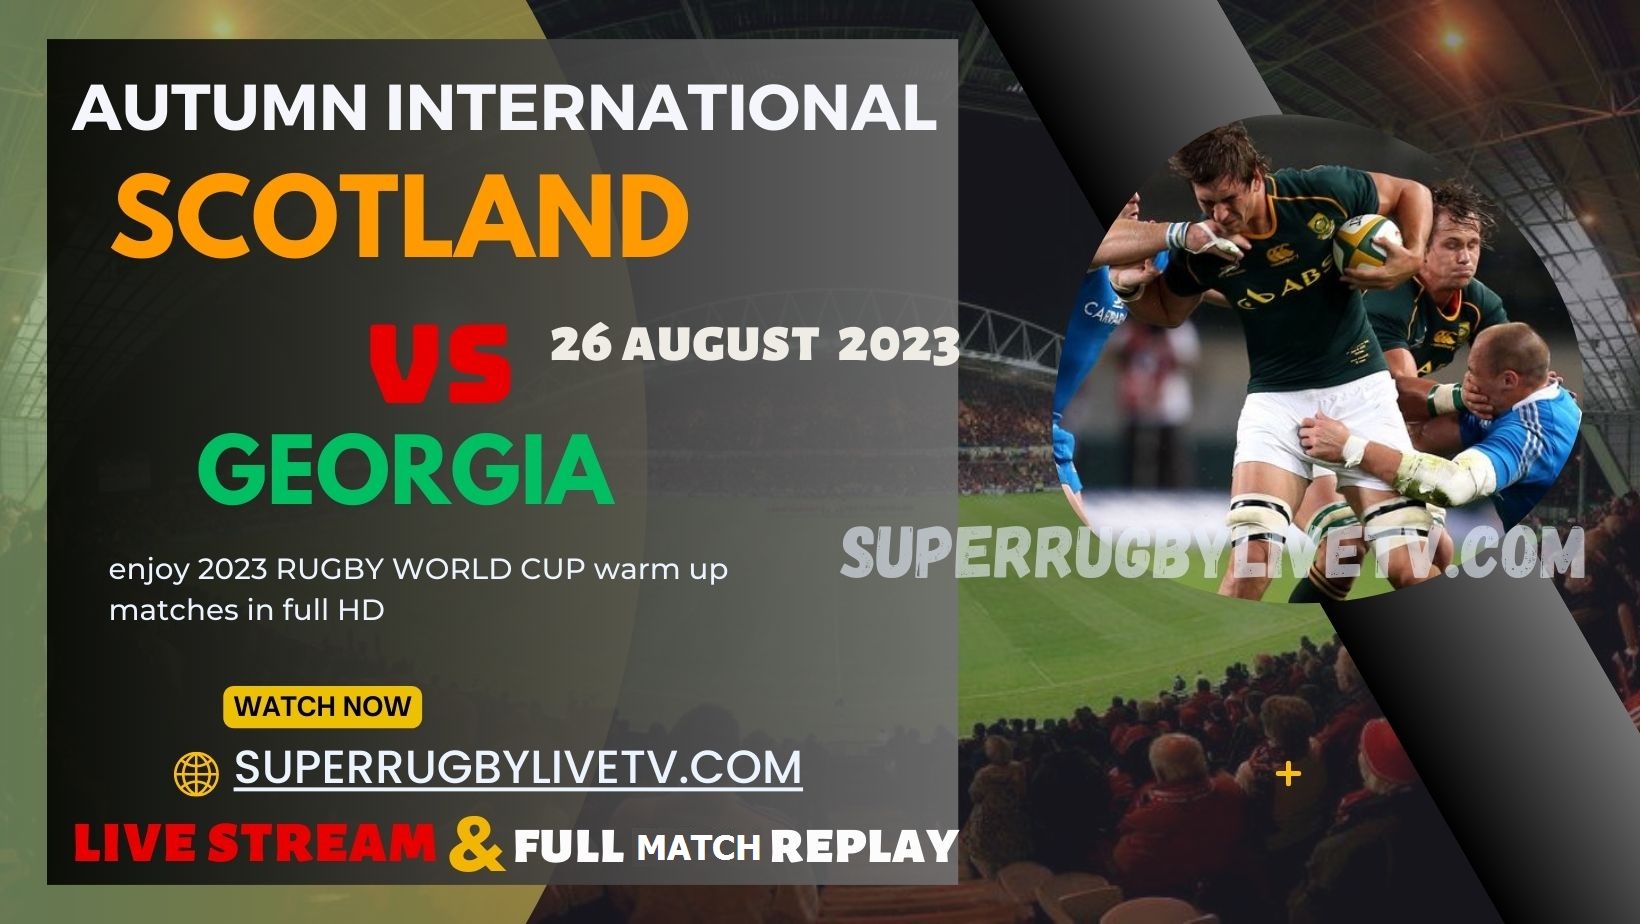 scotland-vs-georgia-autumn-international-rugby-live-stream